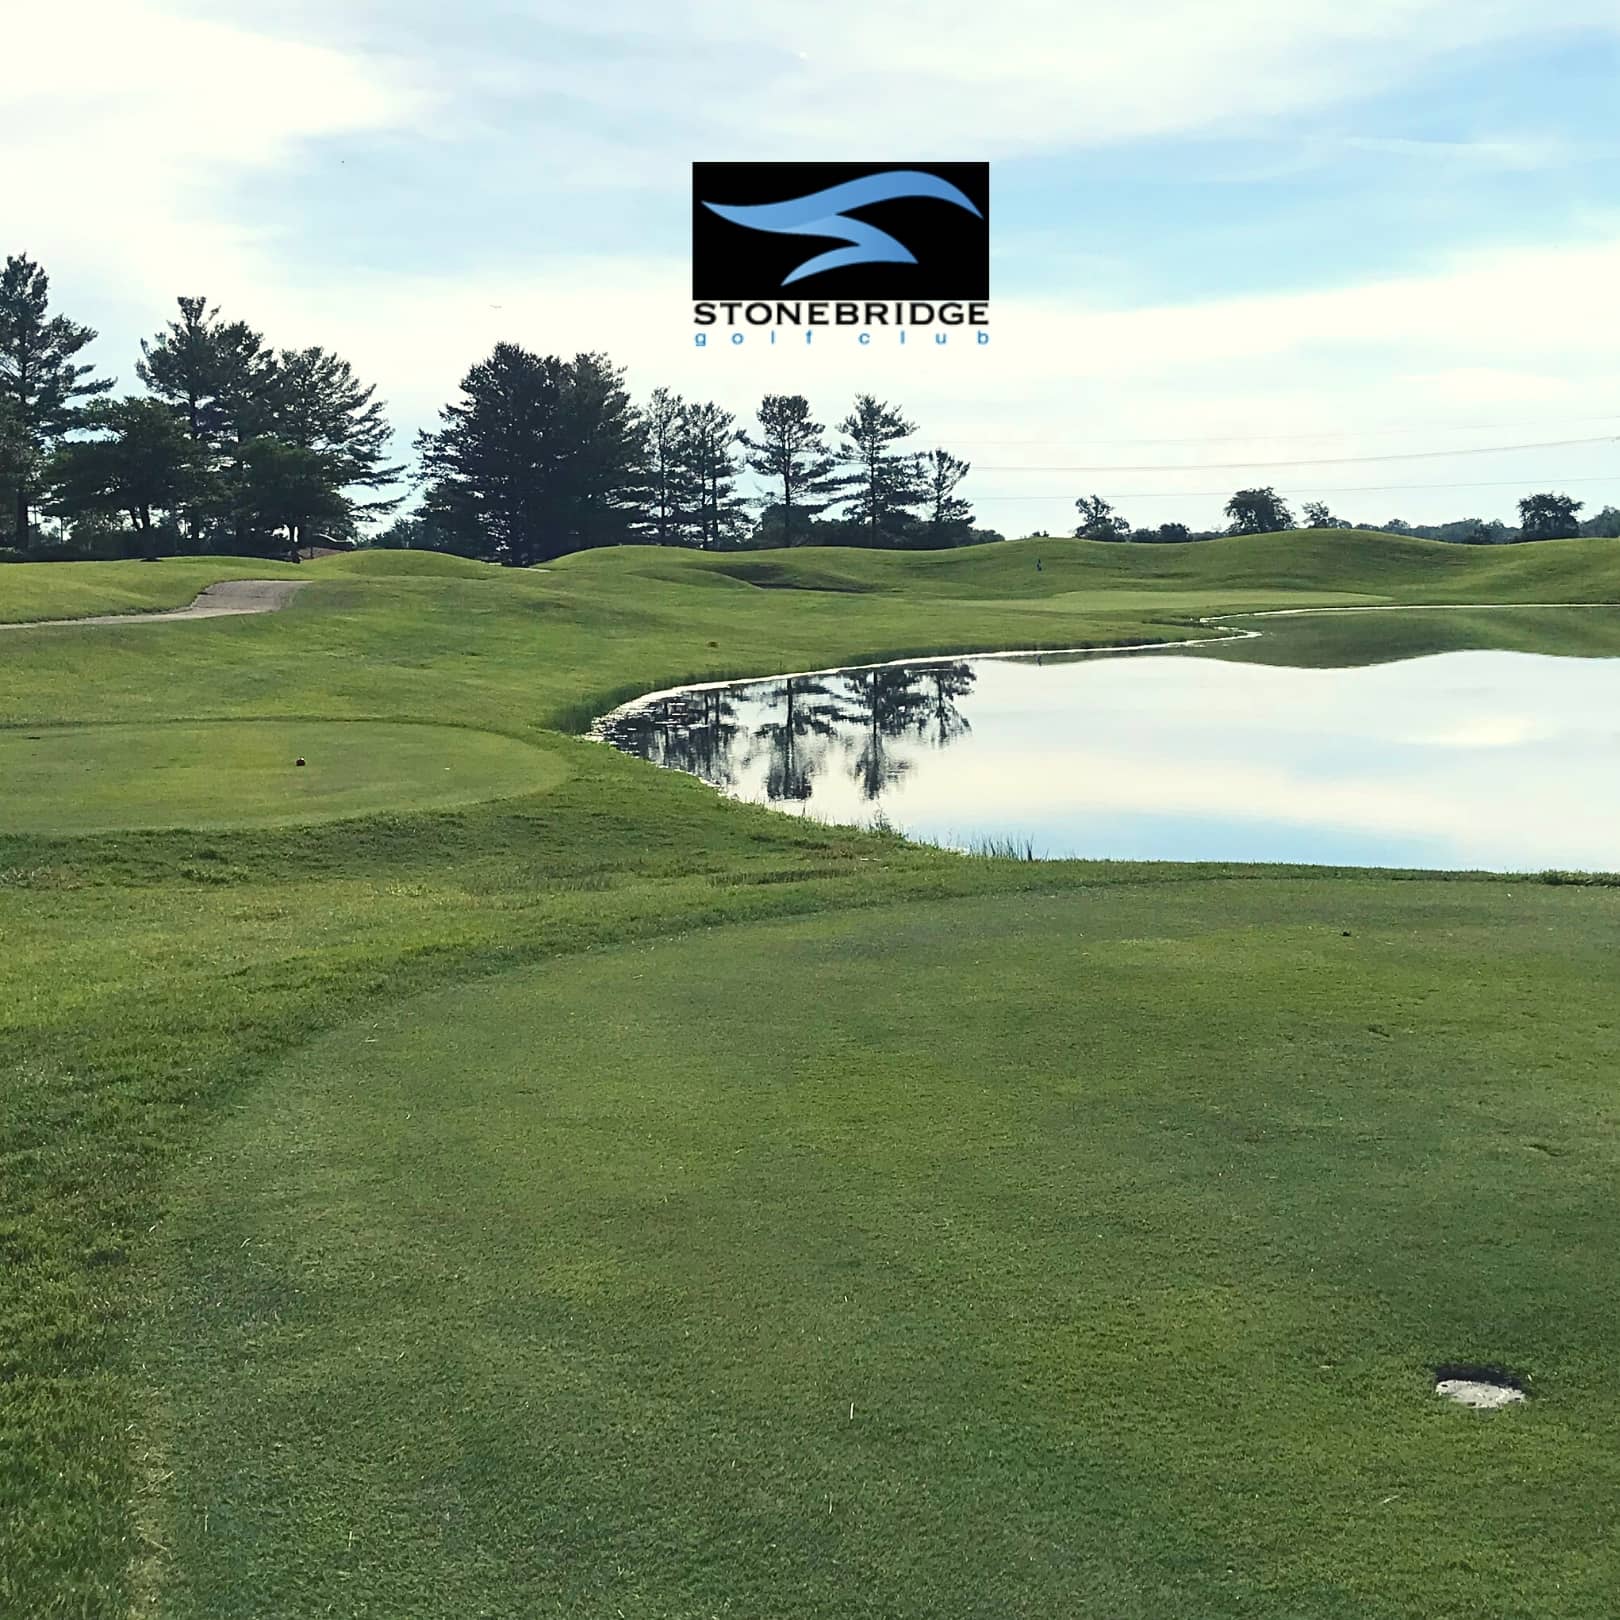 Stonebridge Golf Club | Ann Arbor Golf Course | Driving Range | Weddings |  Golf Outings